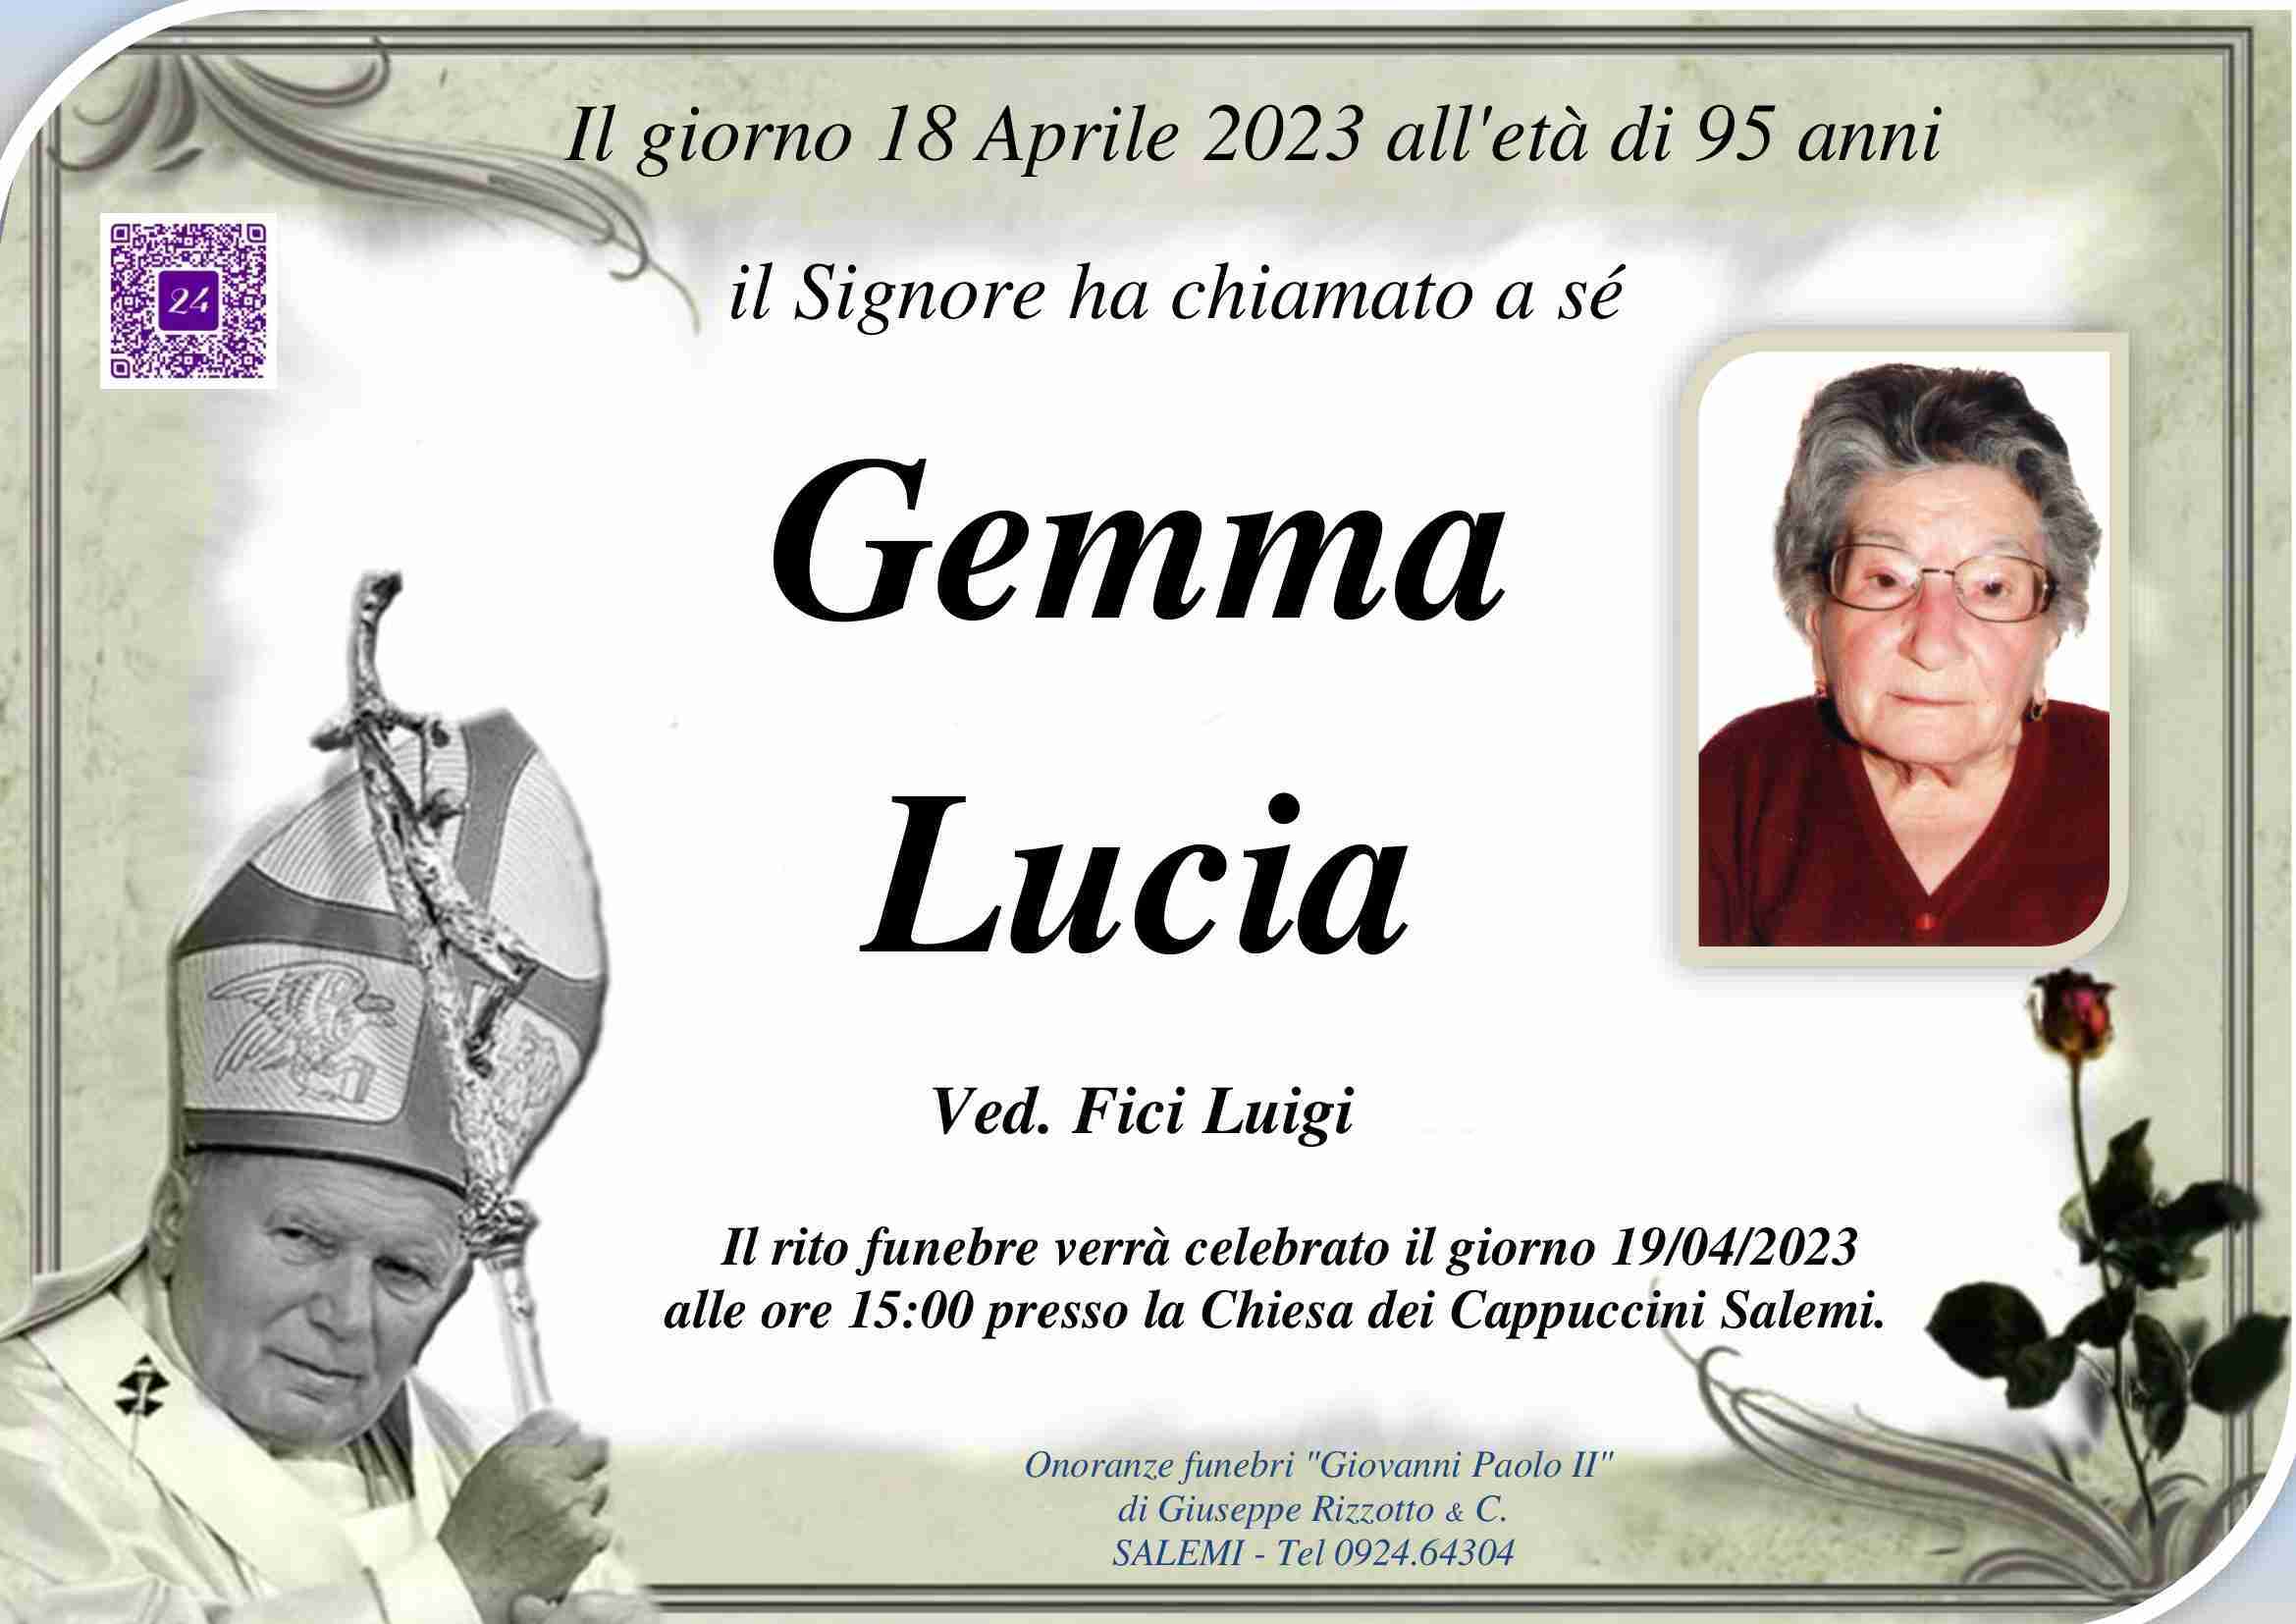 Lucia Gemma